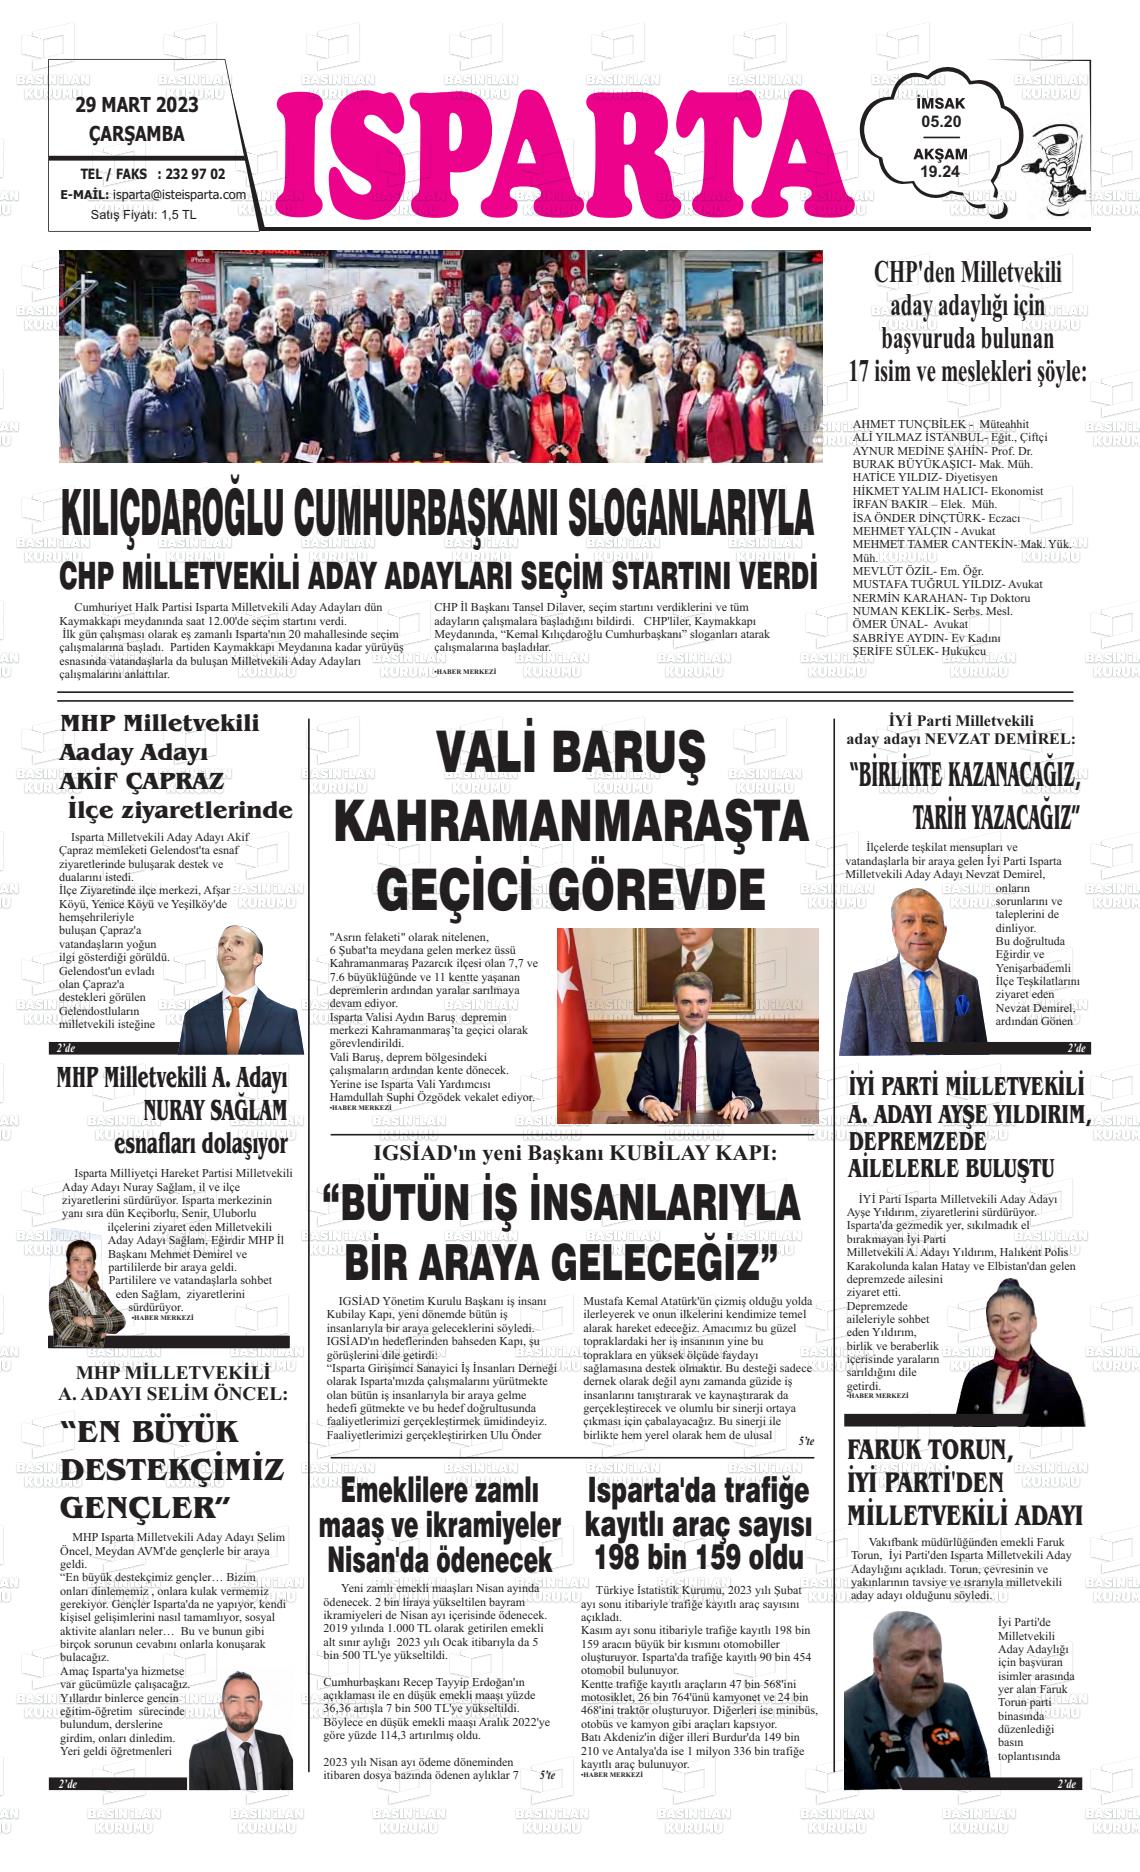 29 Mart 2023 Isparta Gazete Manşeti